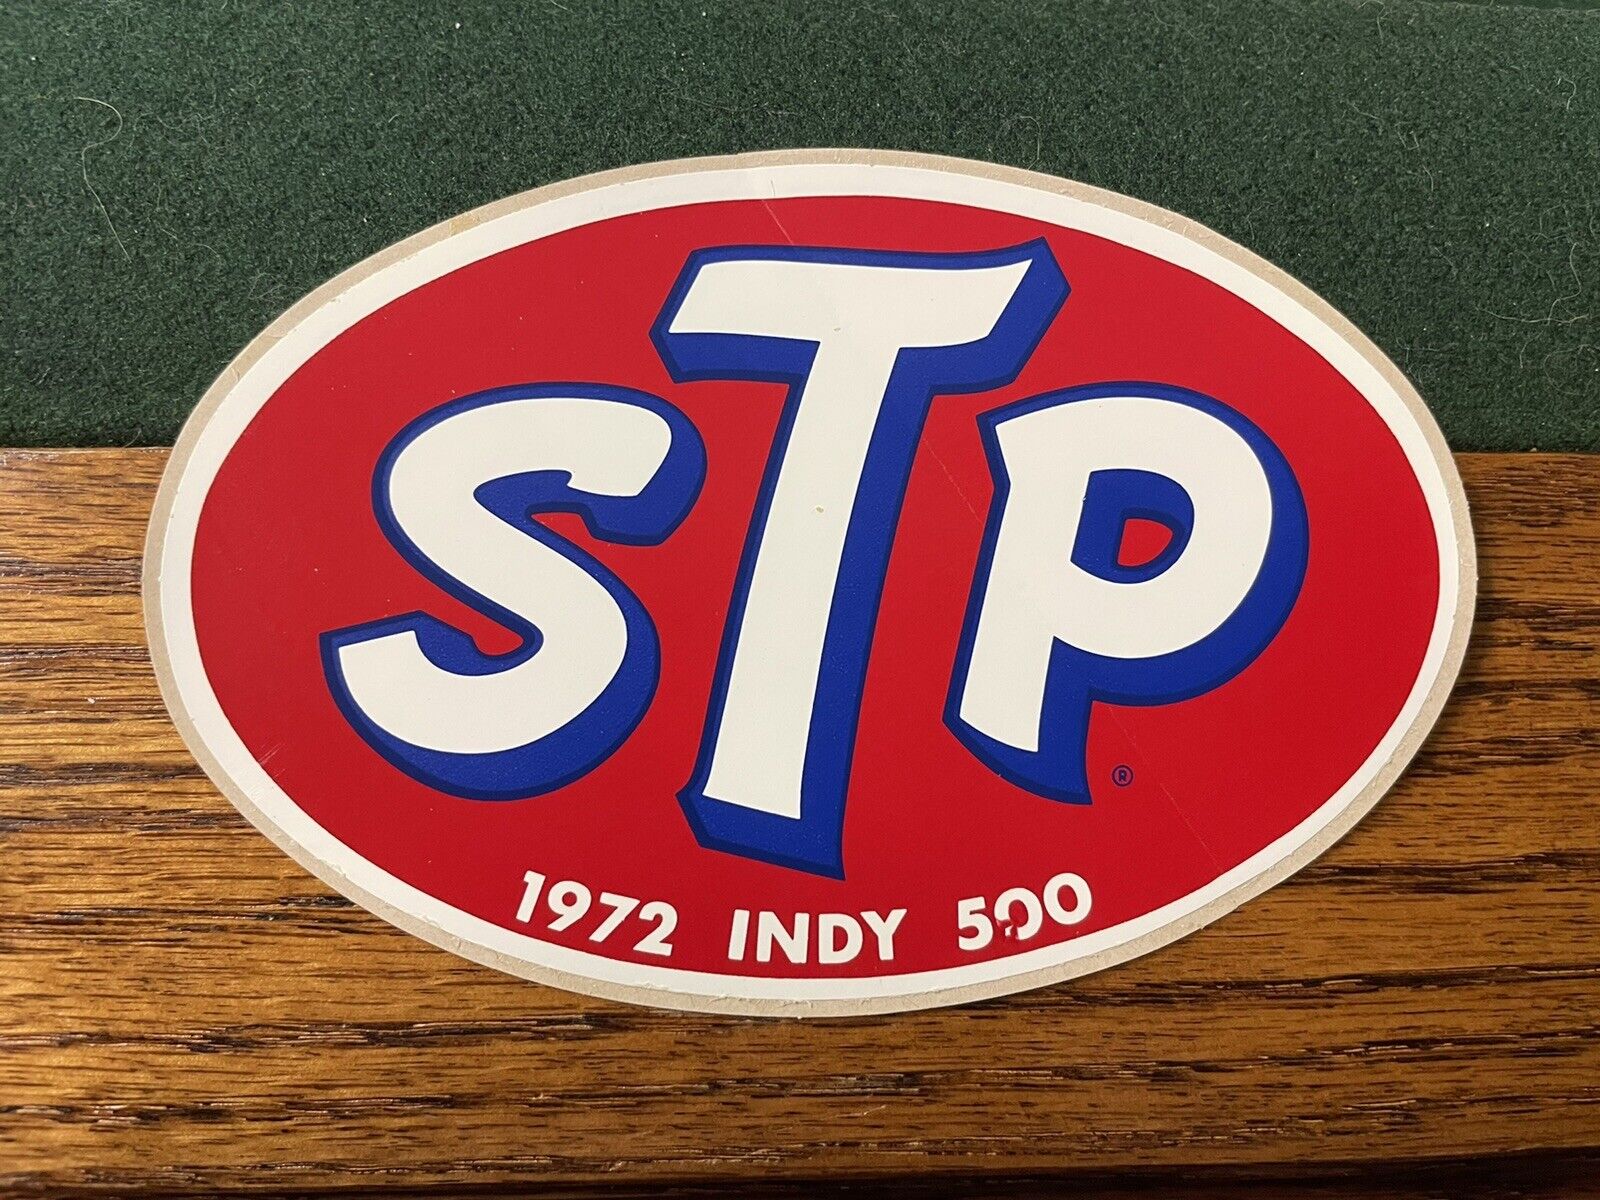 STP 1972 Indy 500 Sticker